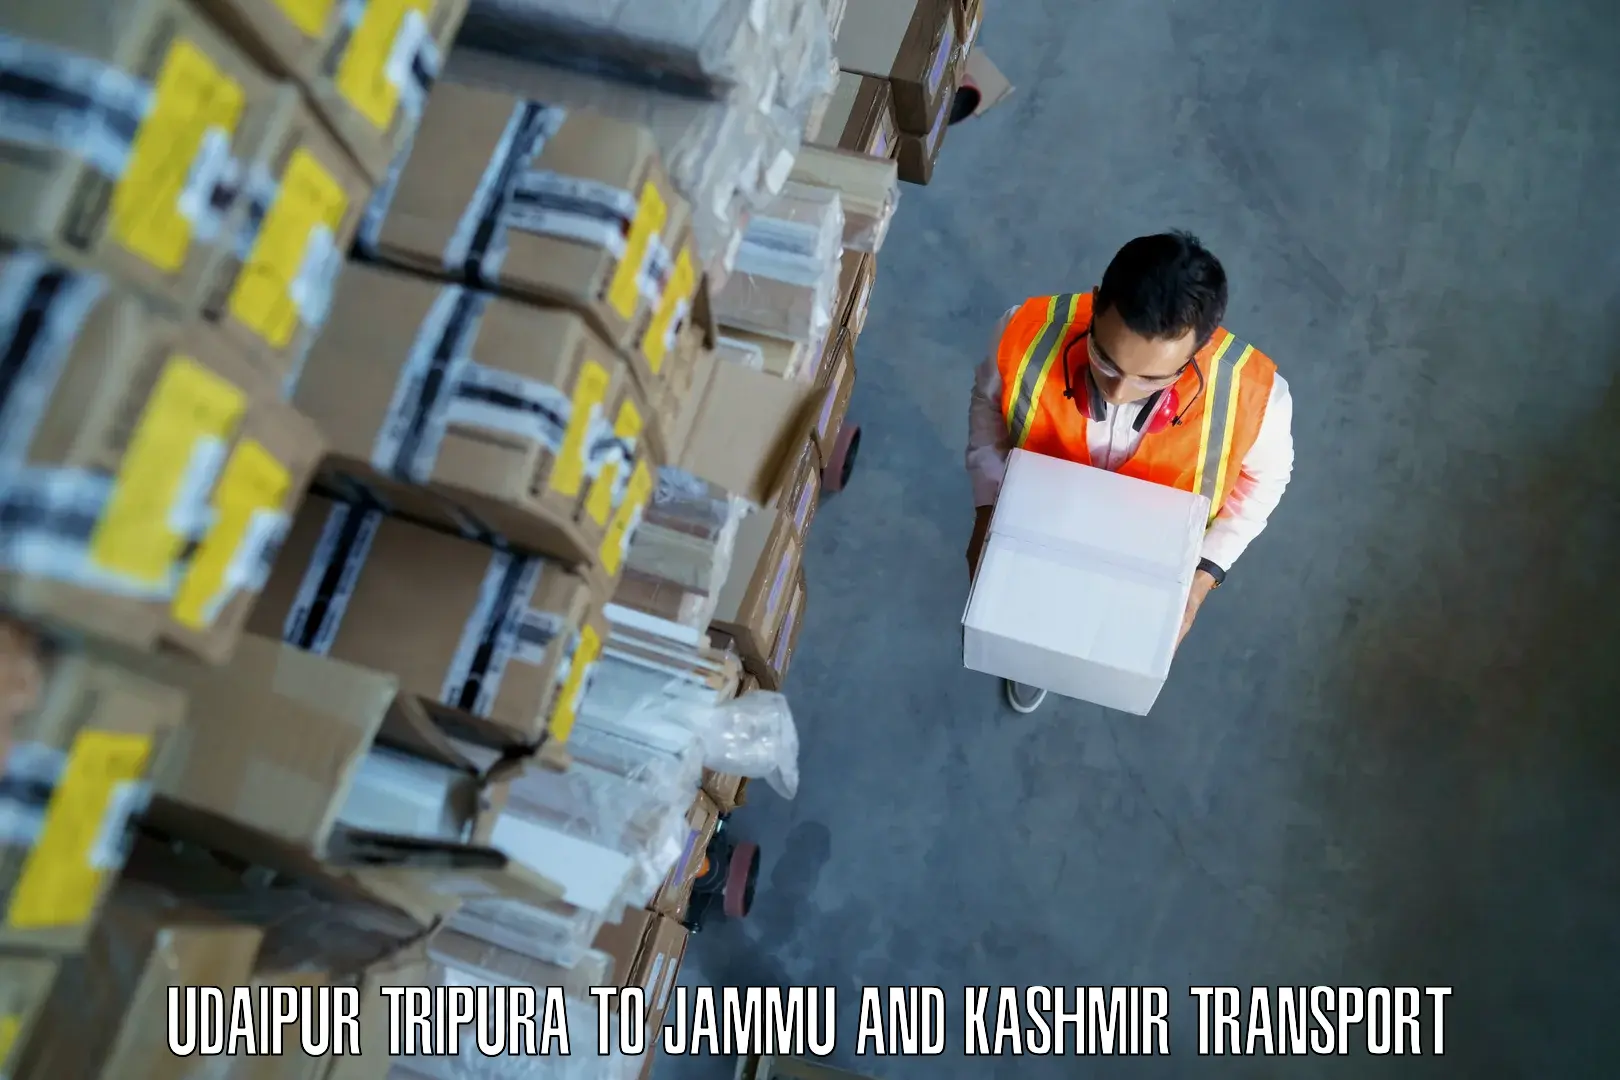 Transport in sharing Udaipur Tripura to Jammu and Kashmir